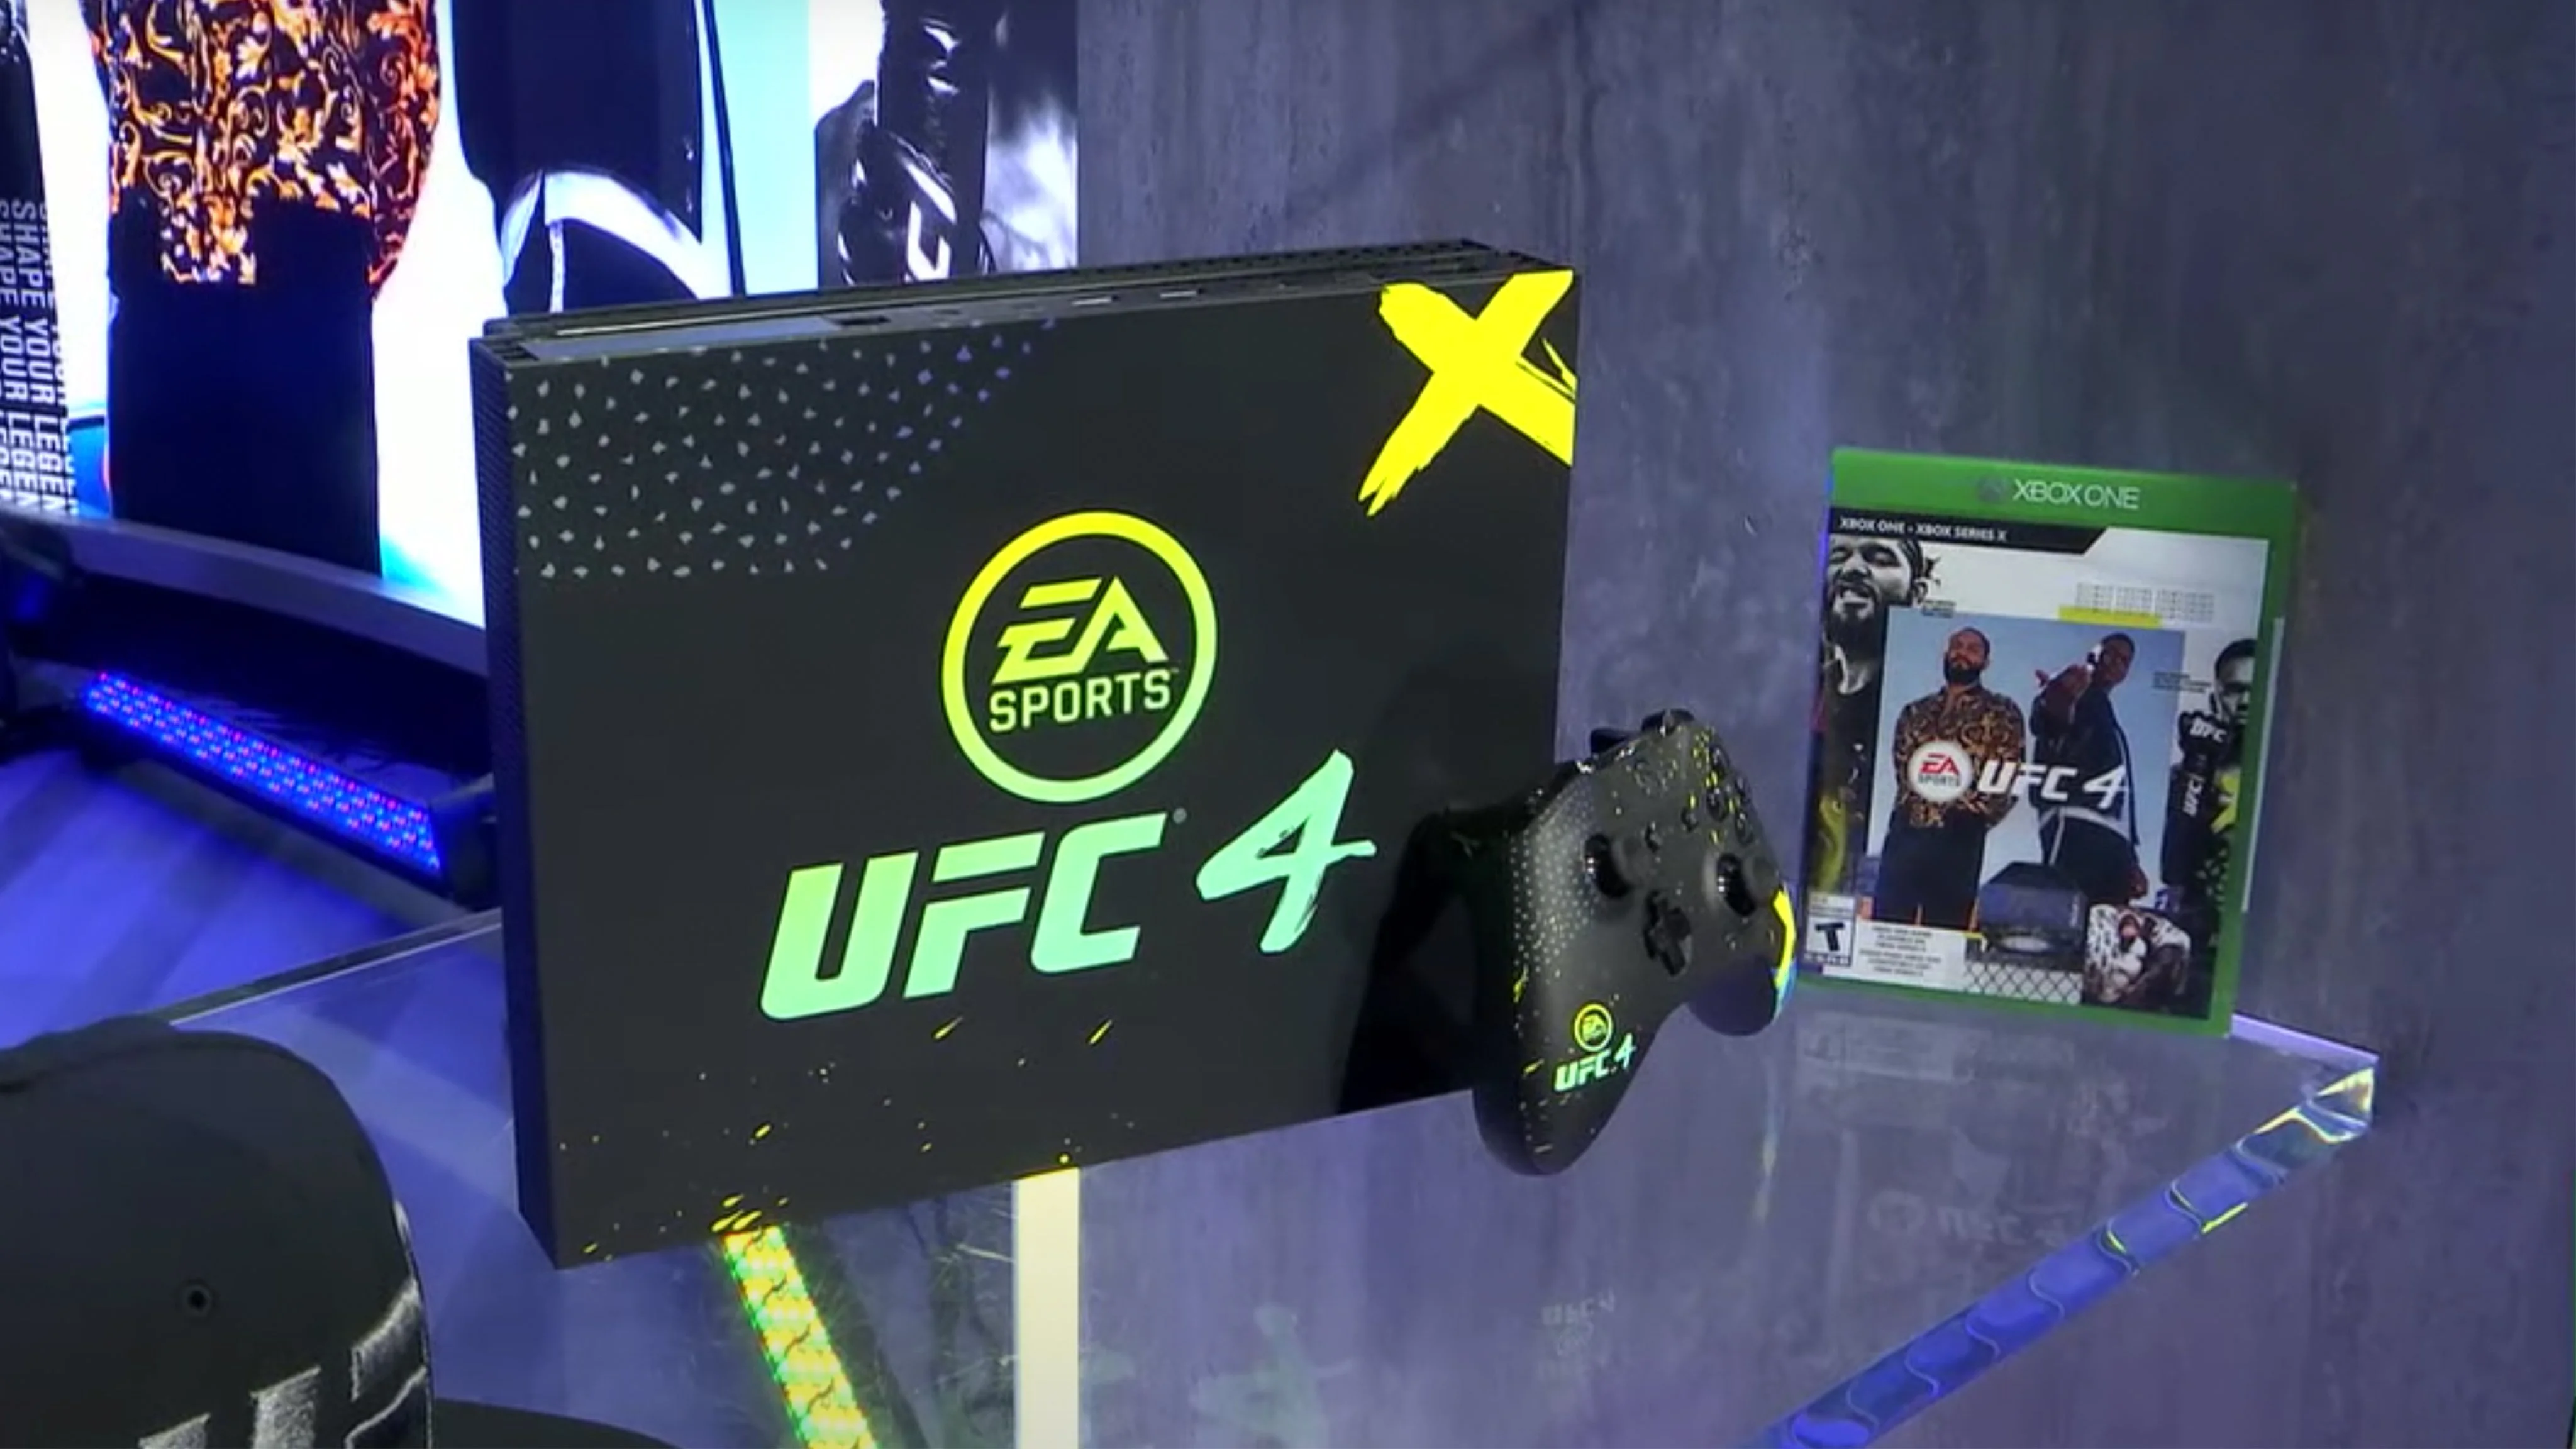  Microsoft Xbox One X UFC 4 Console